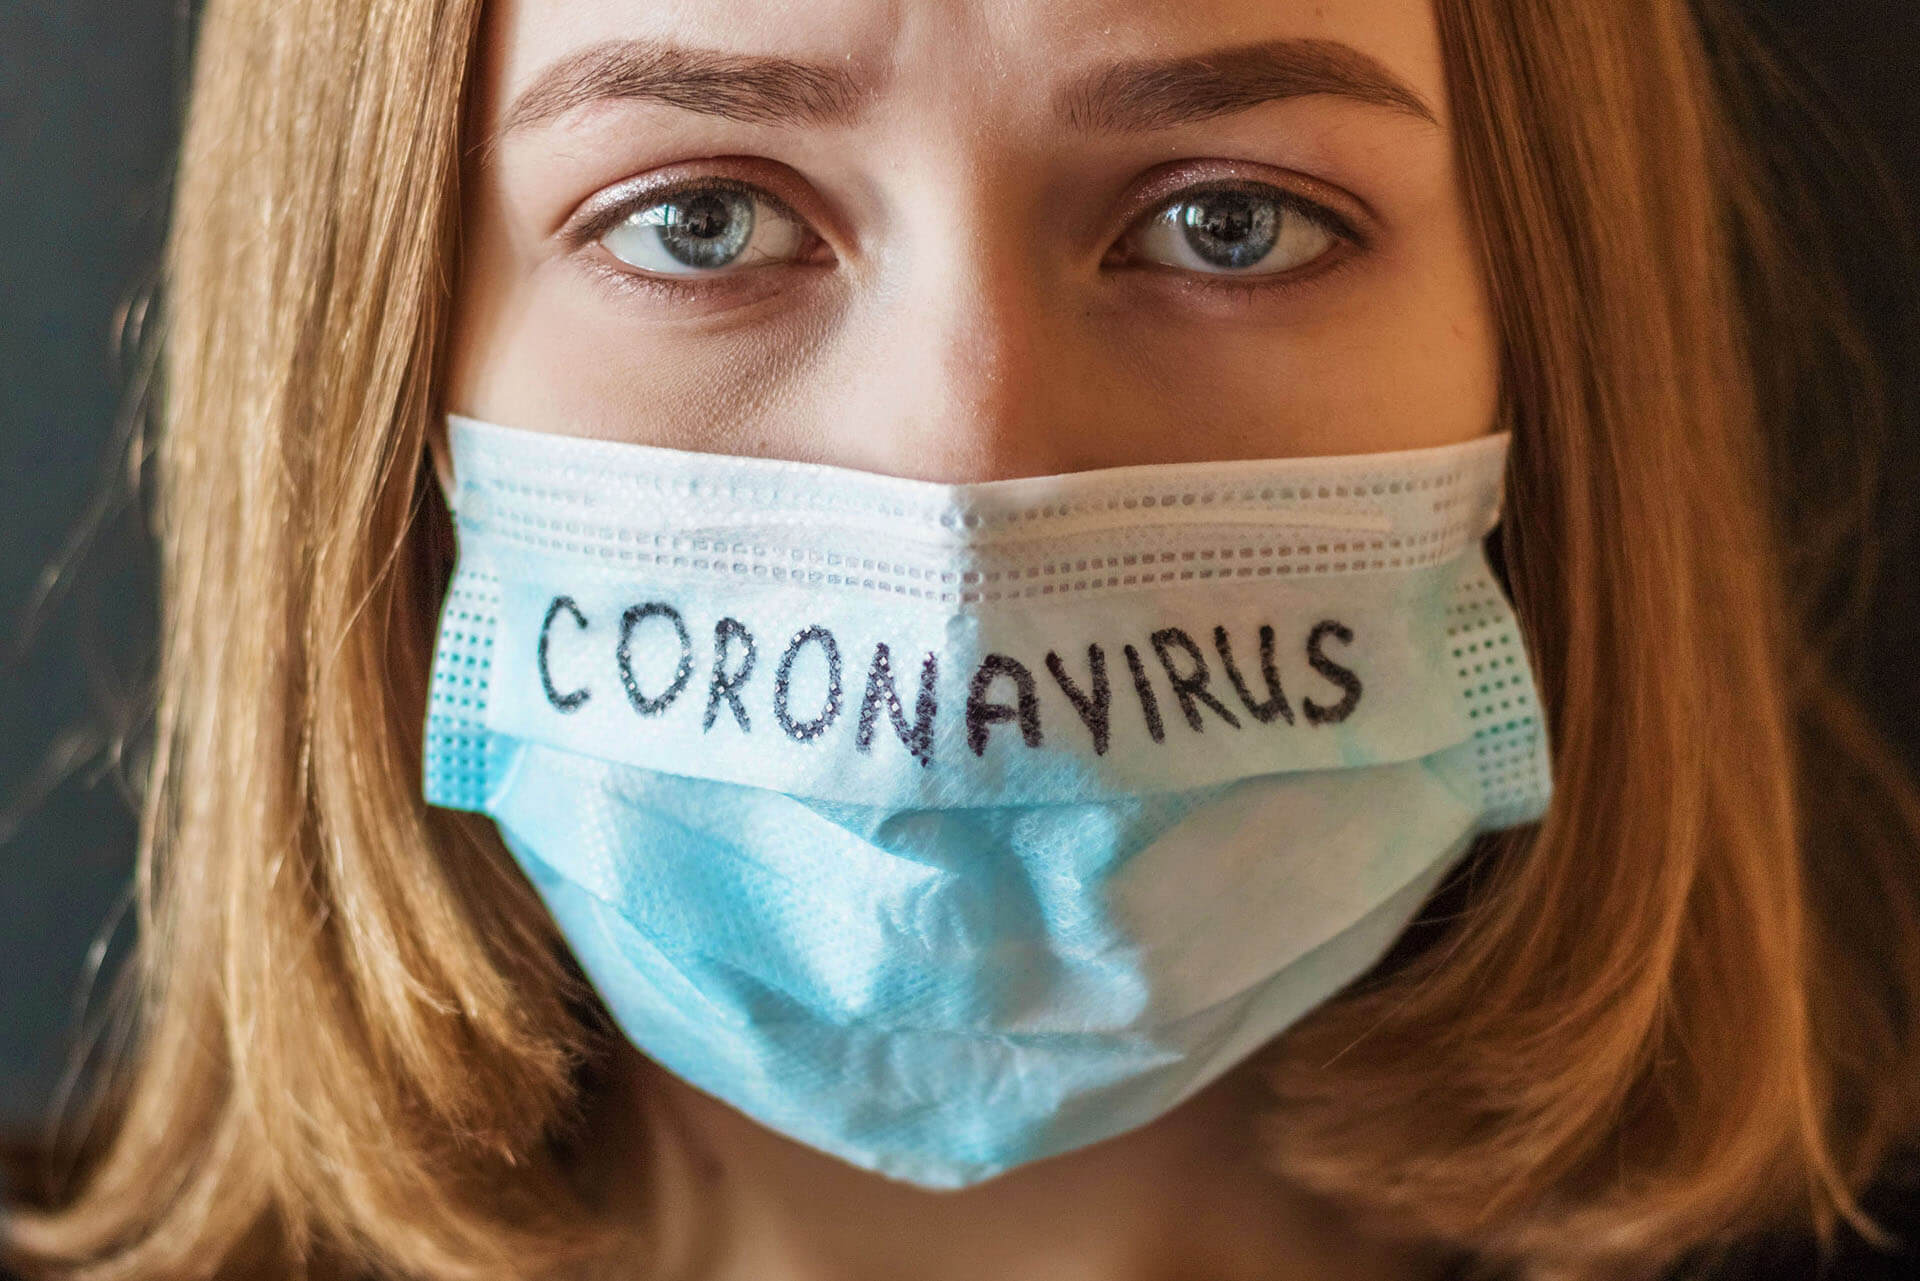 European Medical Agency Working on a Vaccine for Coronavirus?